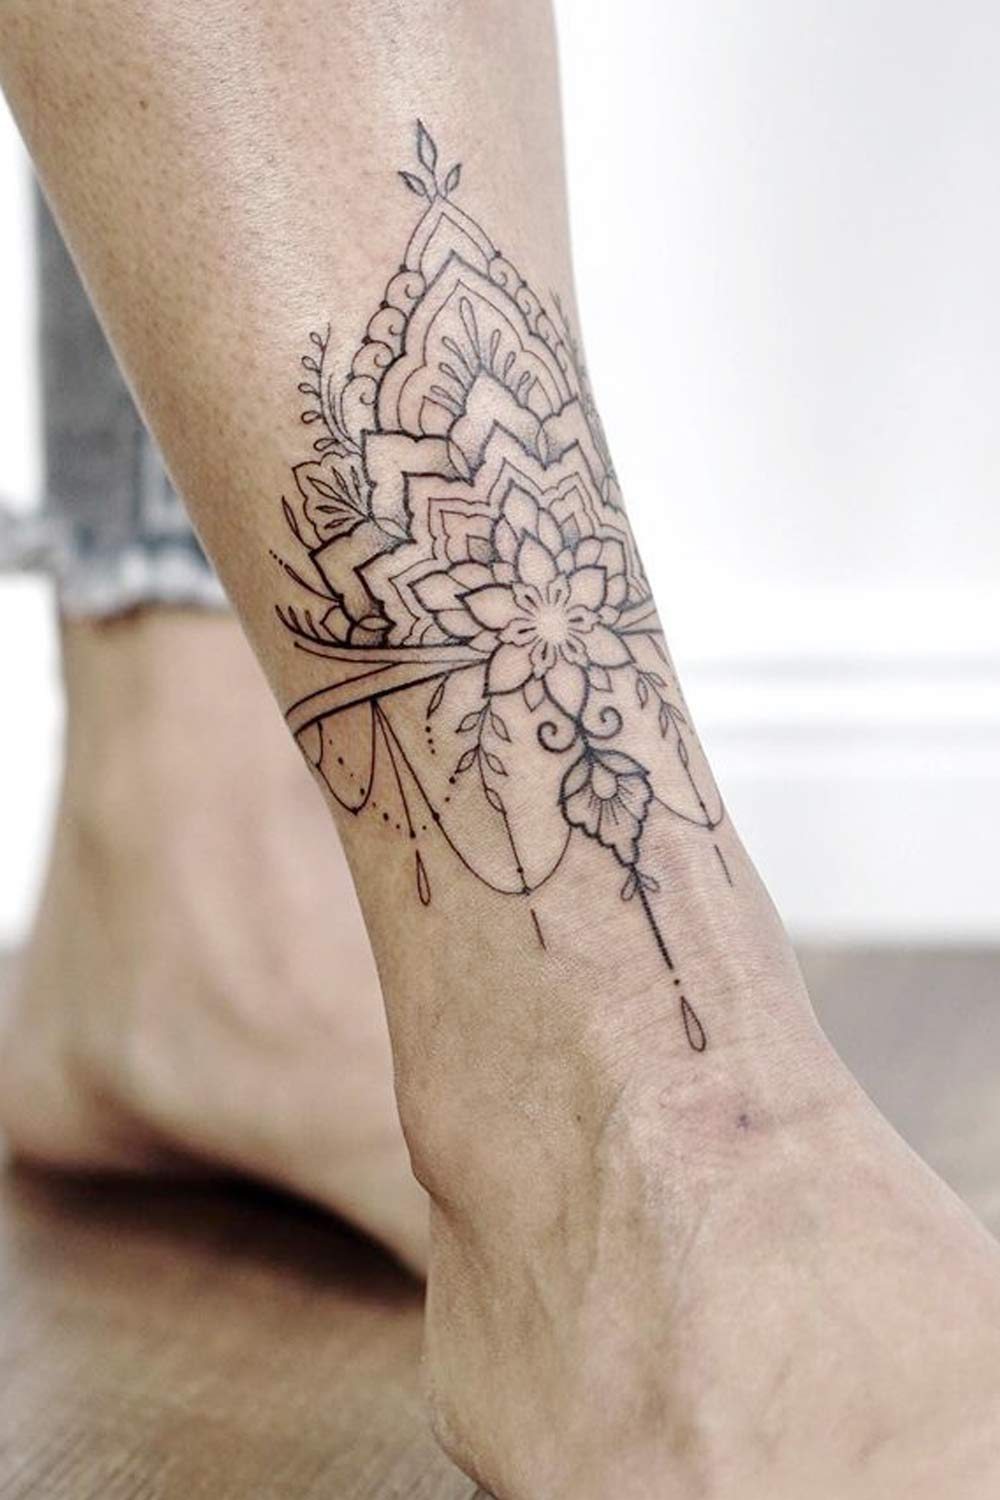 Ankle Mandala Tattoo Design